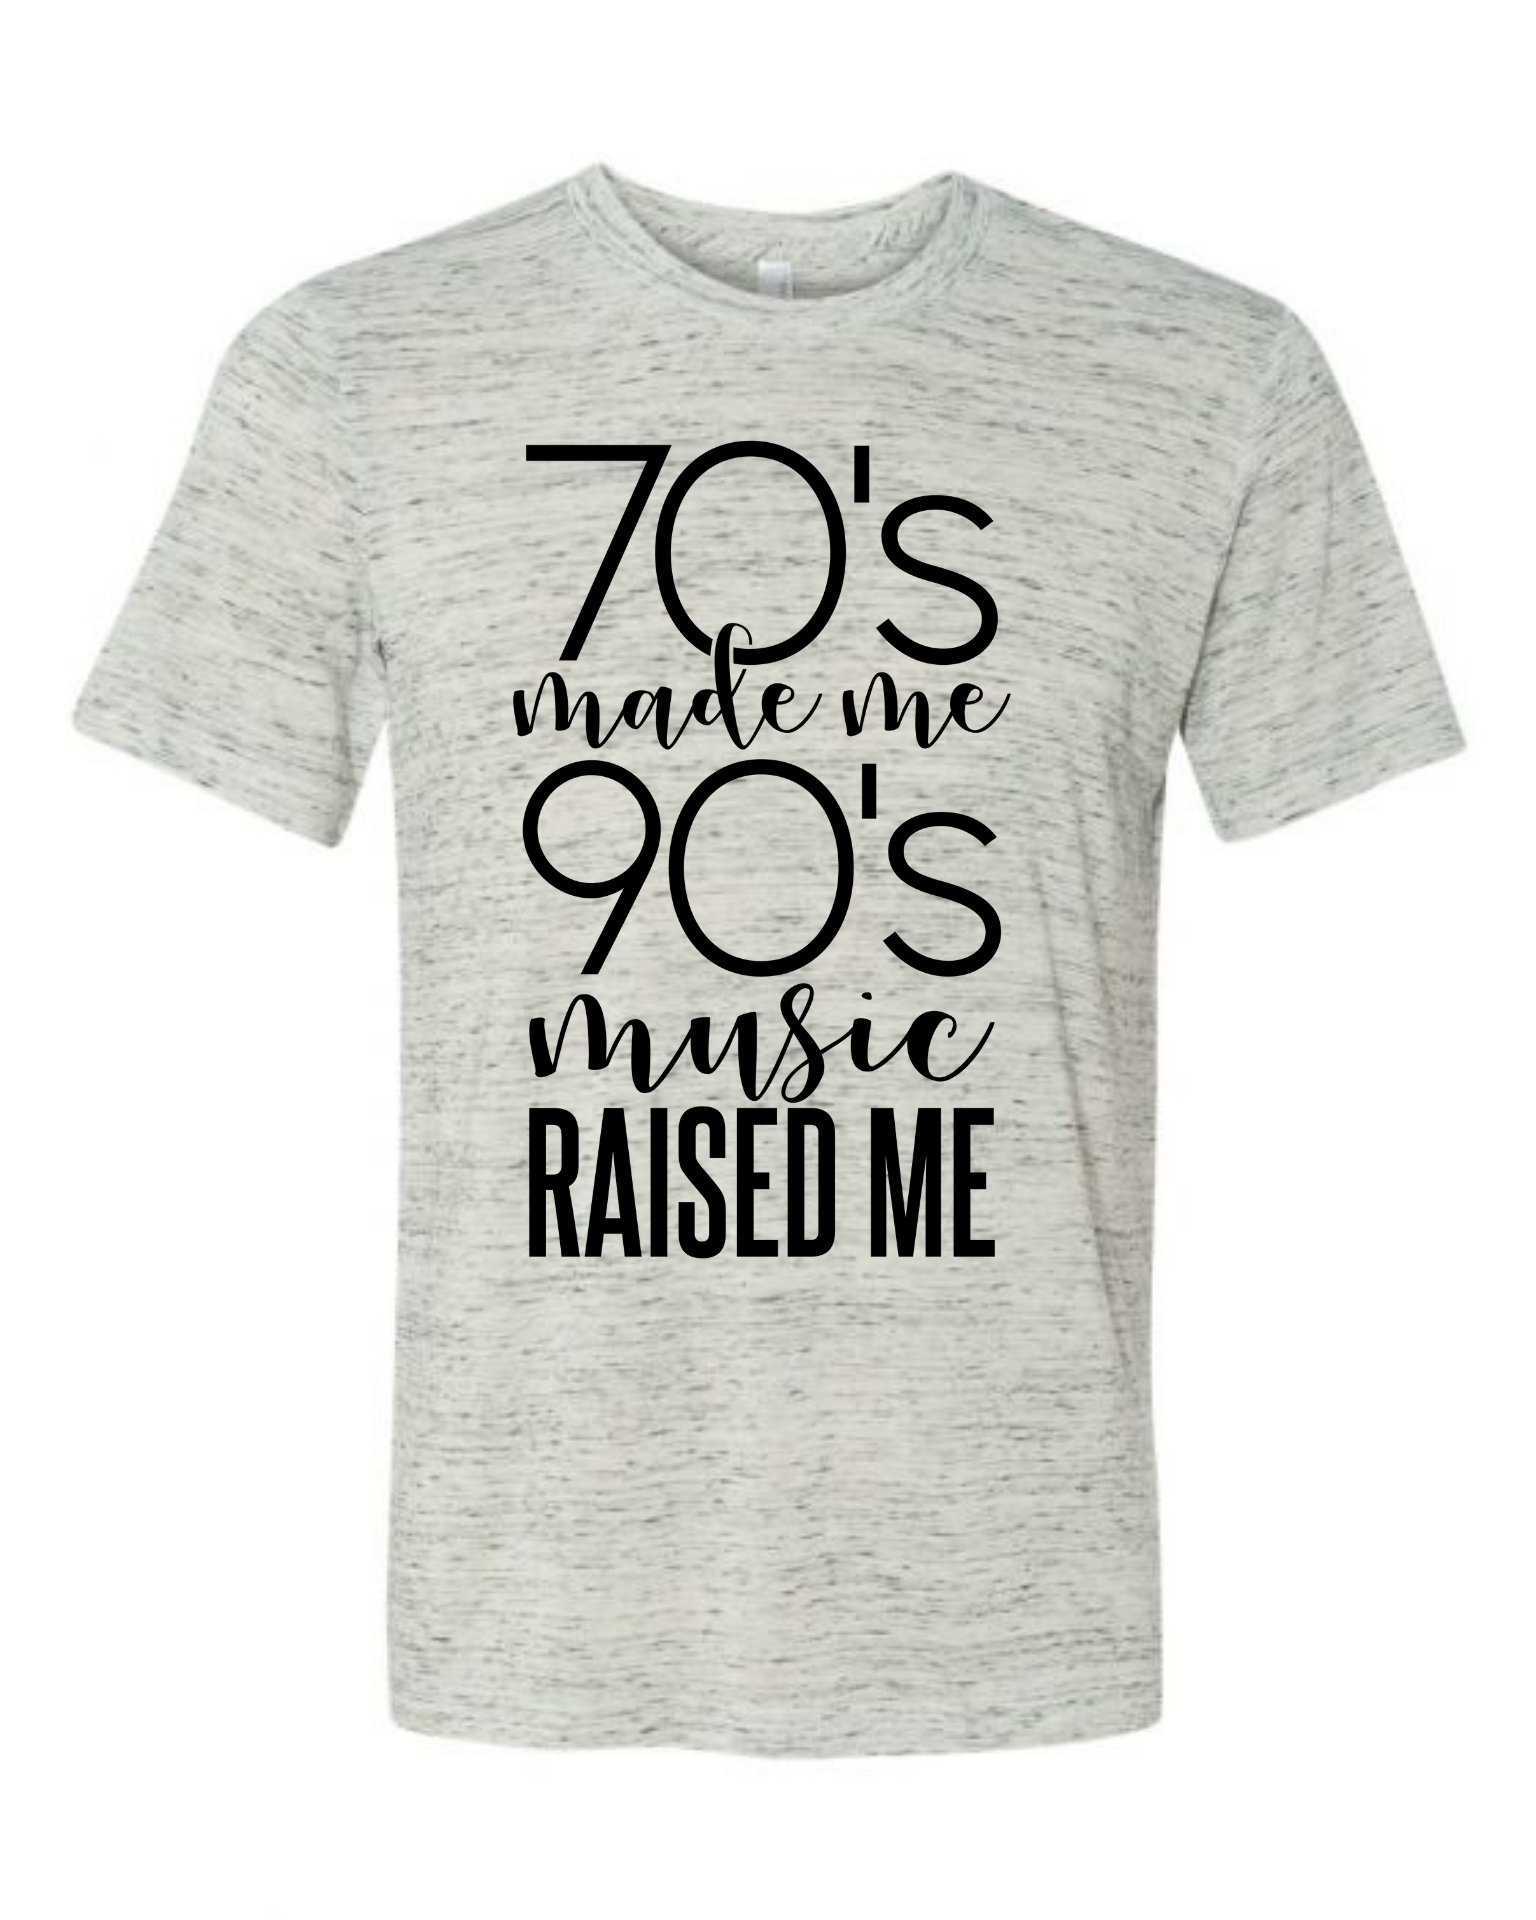 70's Made Me, 90's Music Raised Me